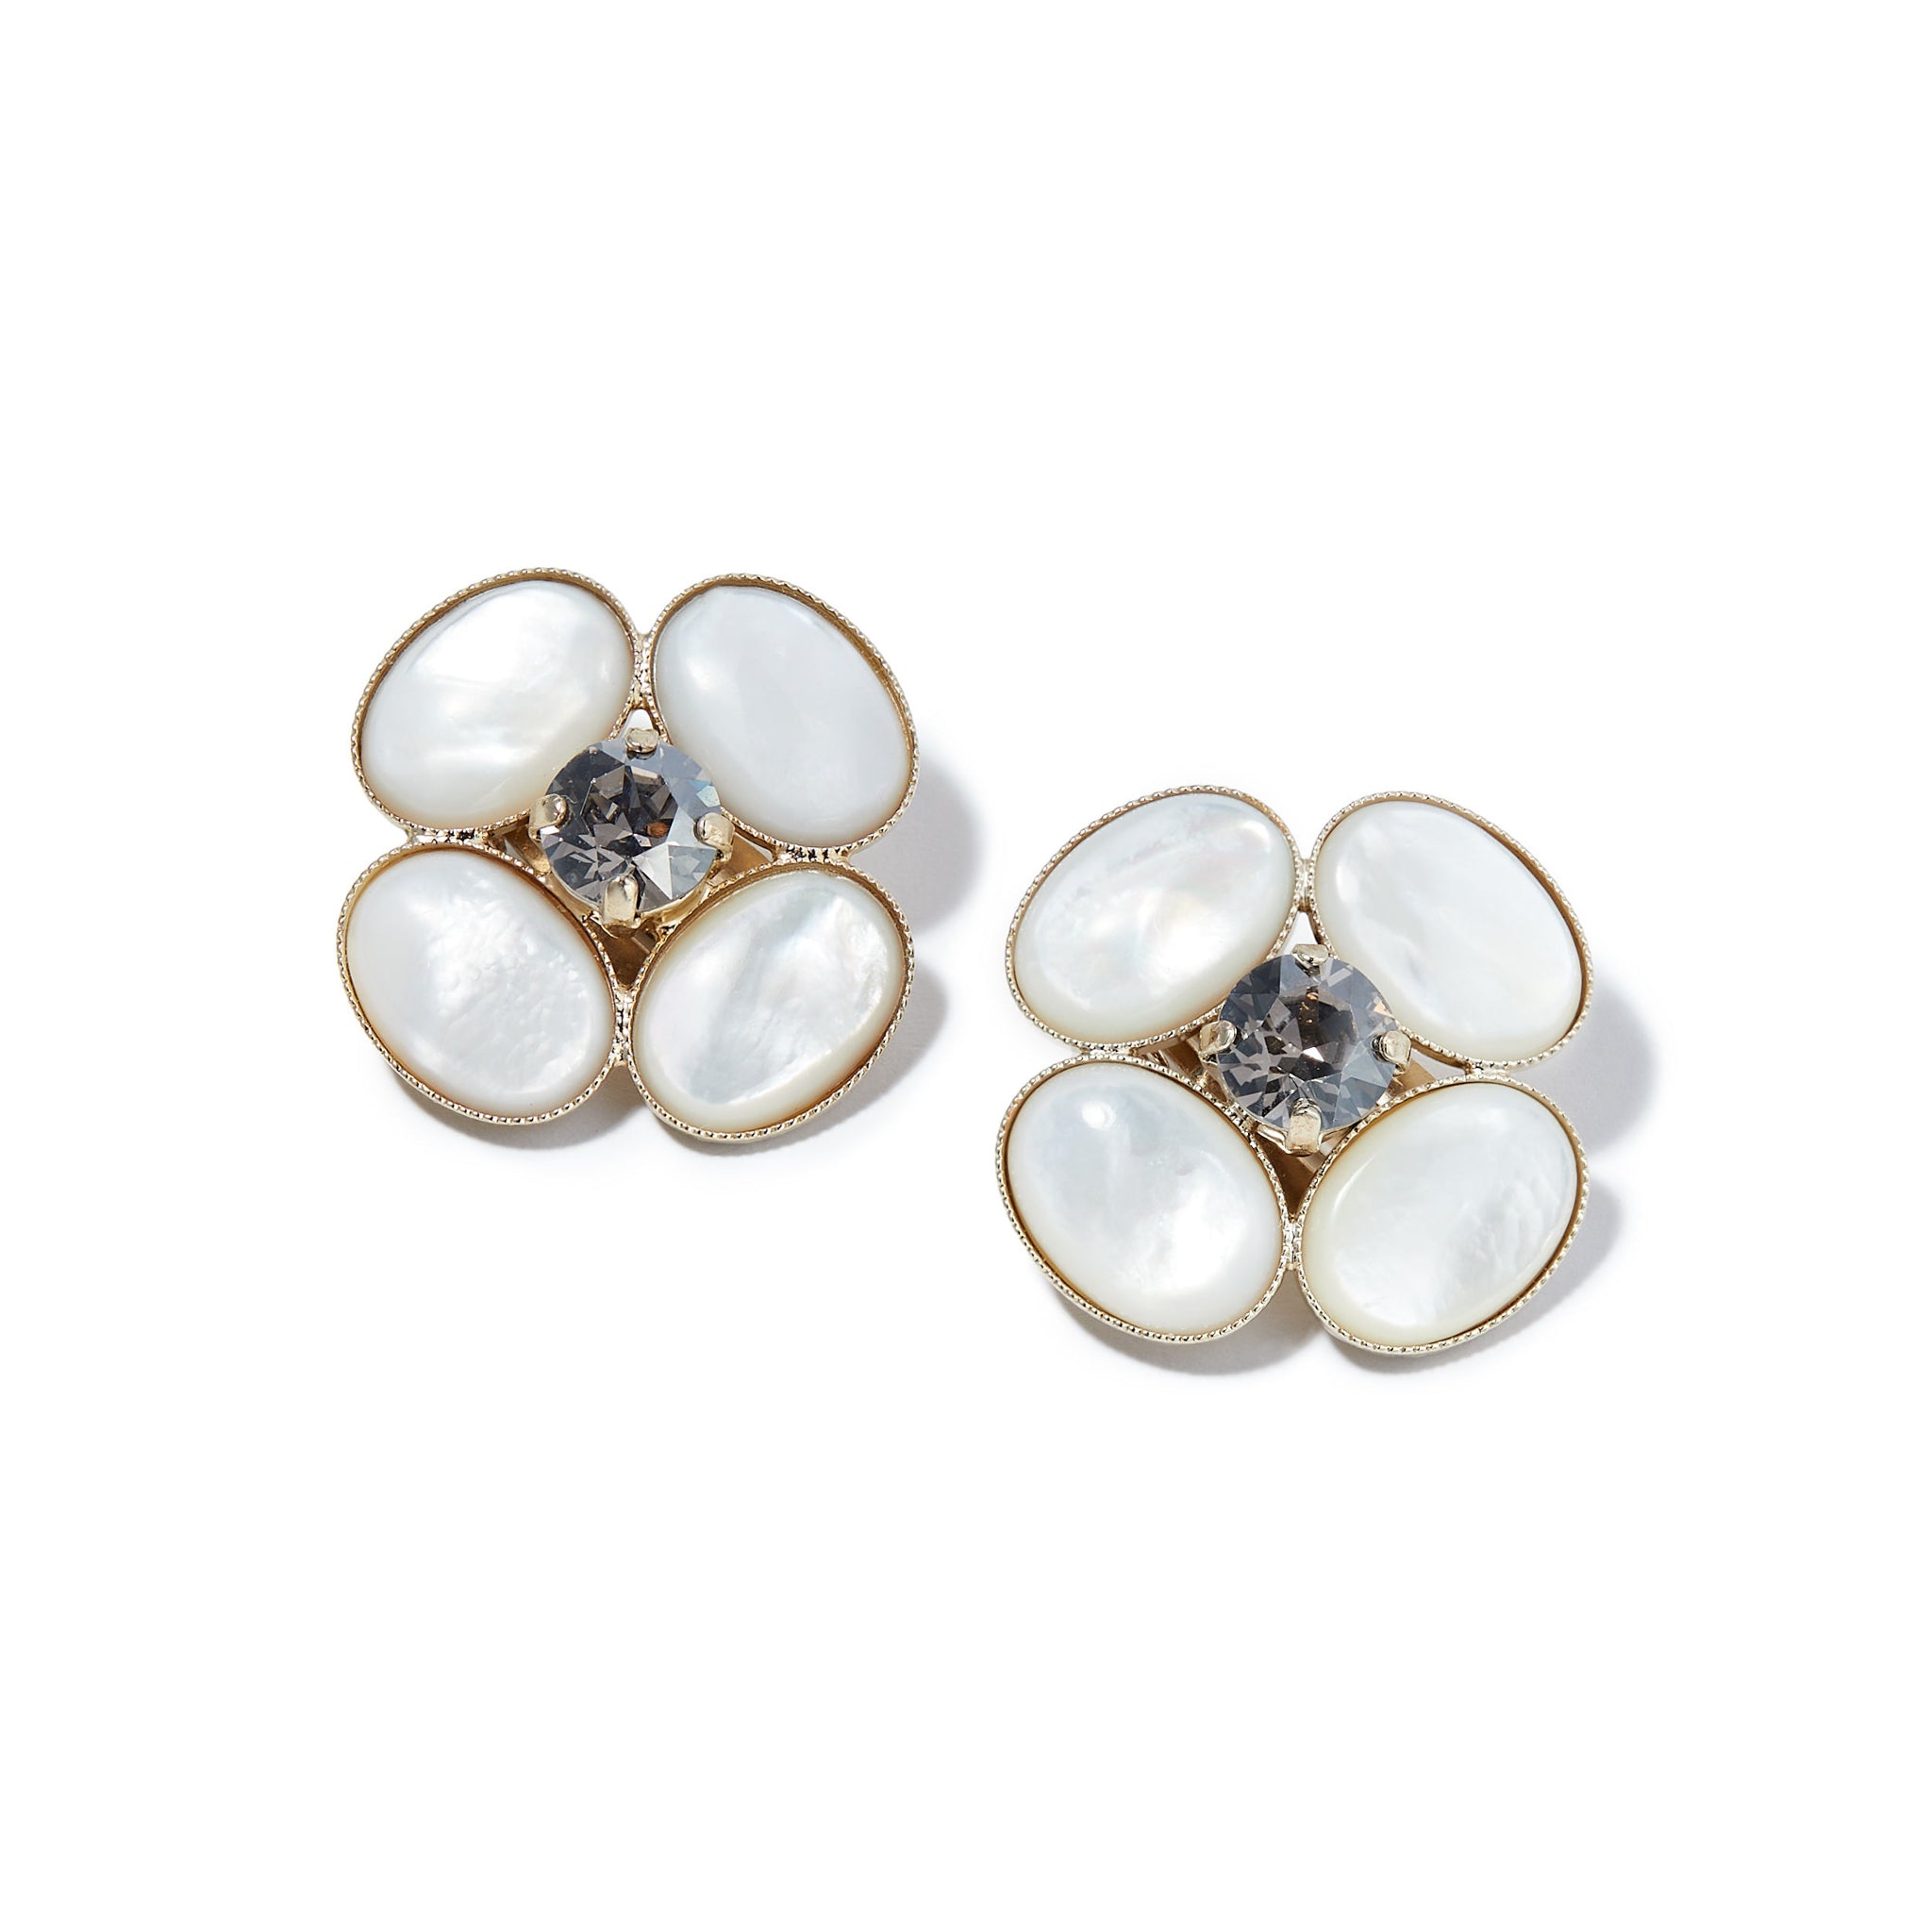 Cade Silver Stud Earrings in Ivory Mother-of-Pearl | Kendra Scott